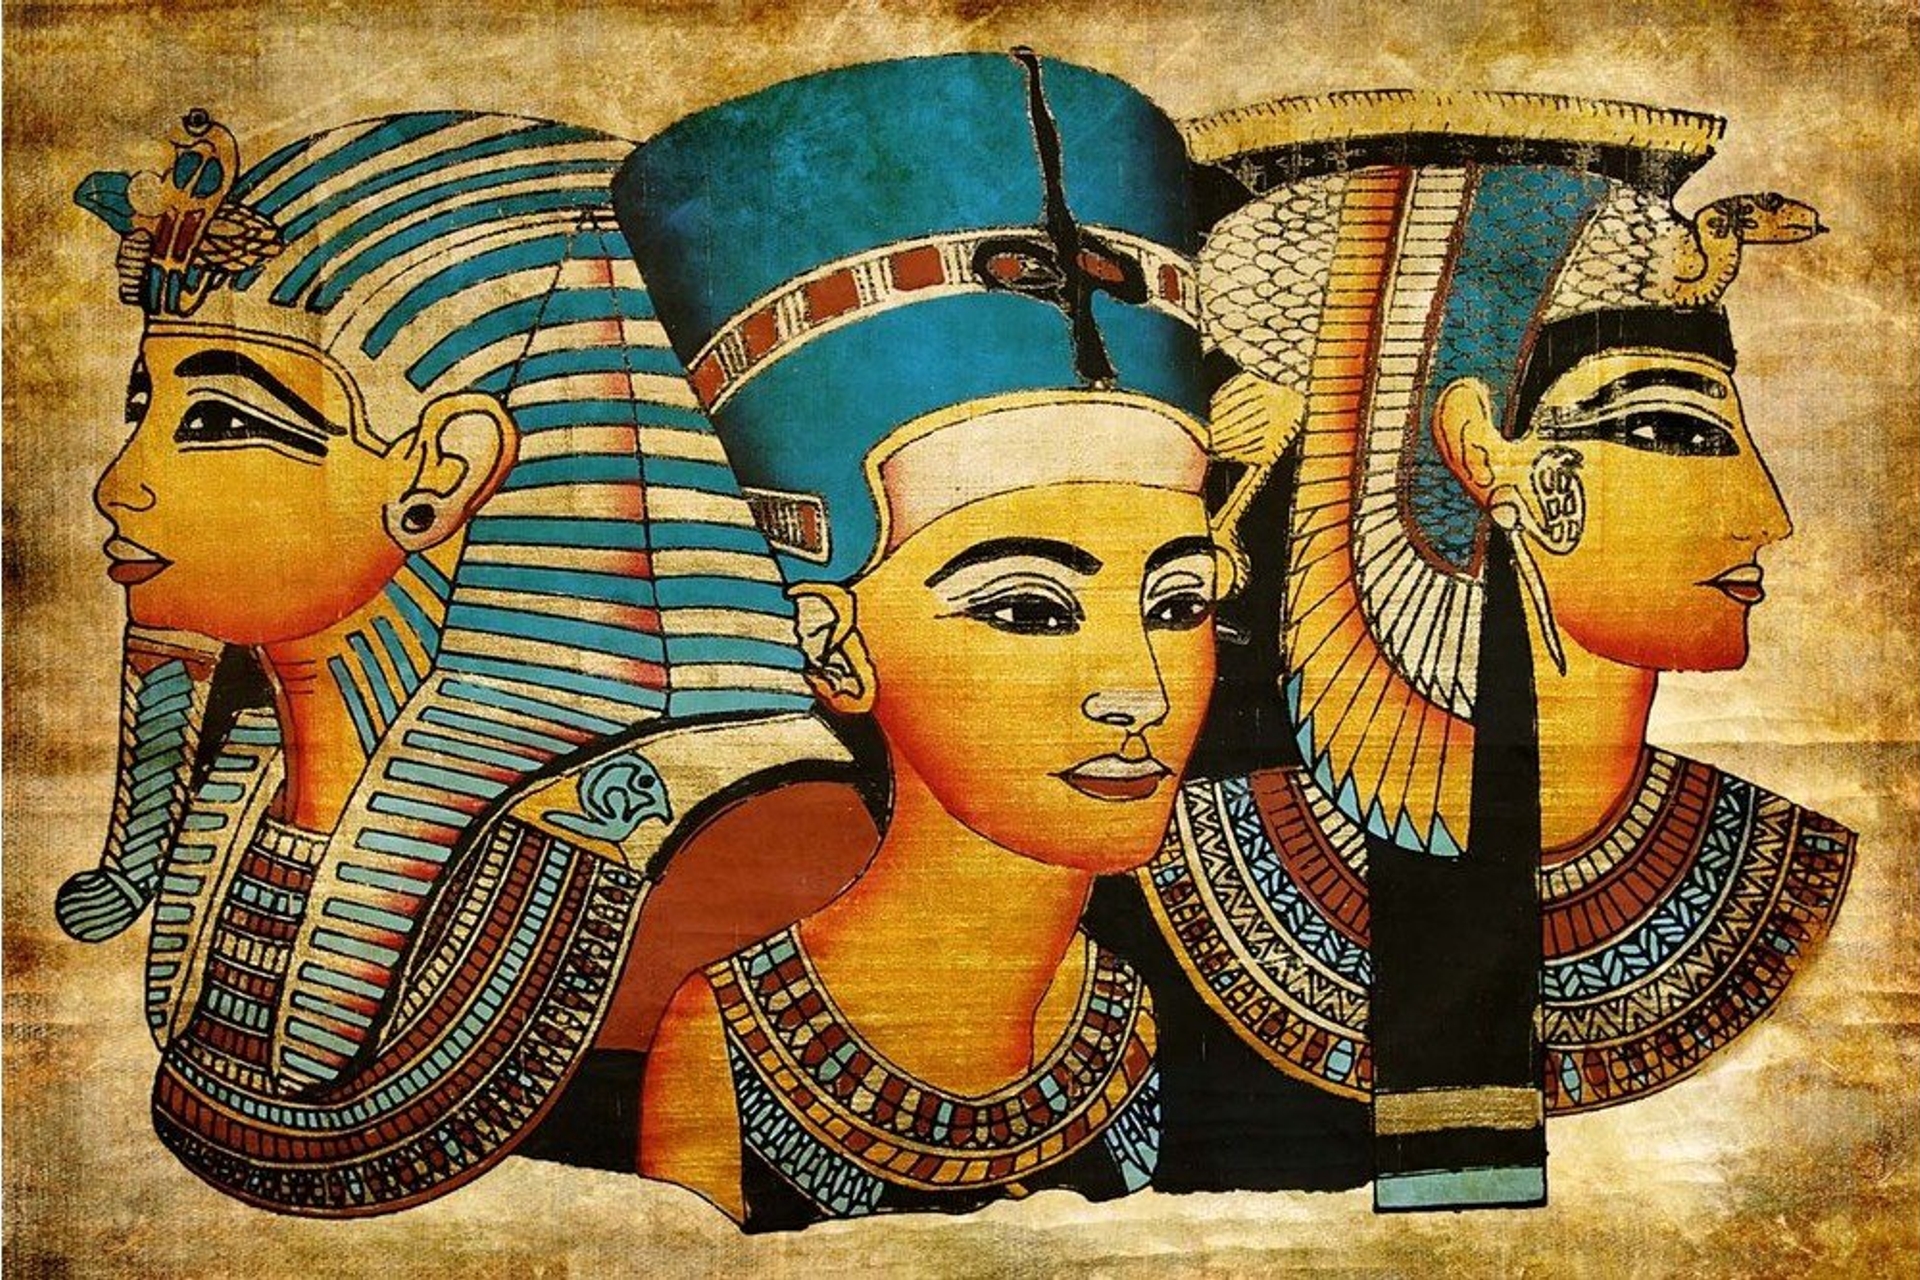 EGYPT 2 DEV BOYUT CANVAS TABLO 100X150 CM